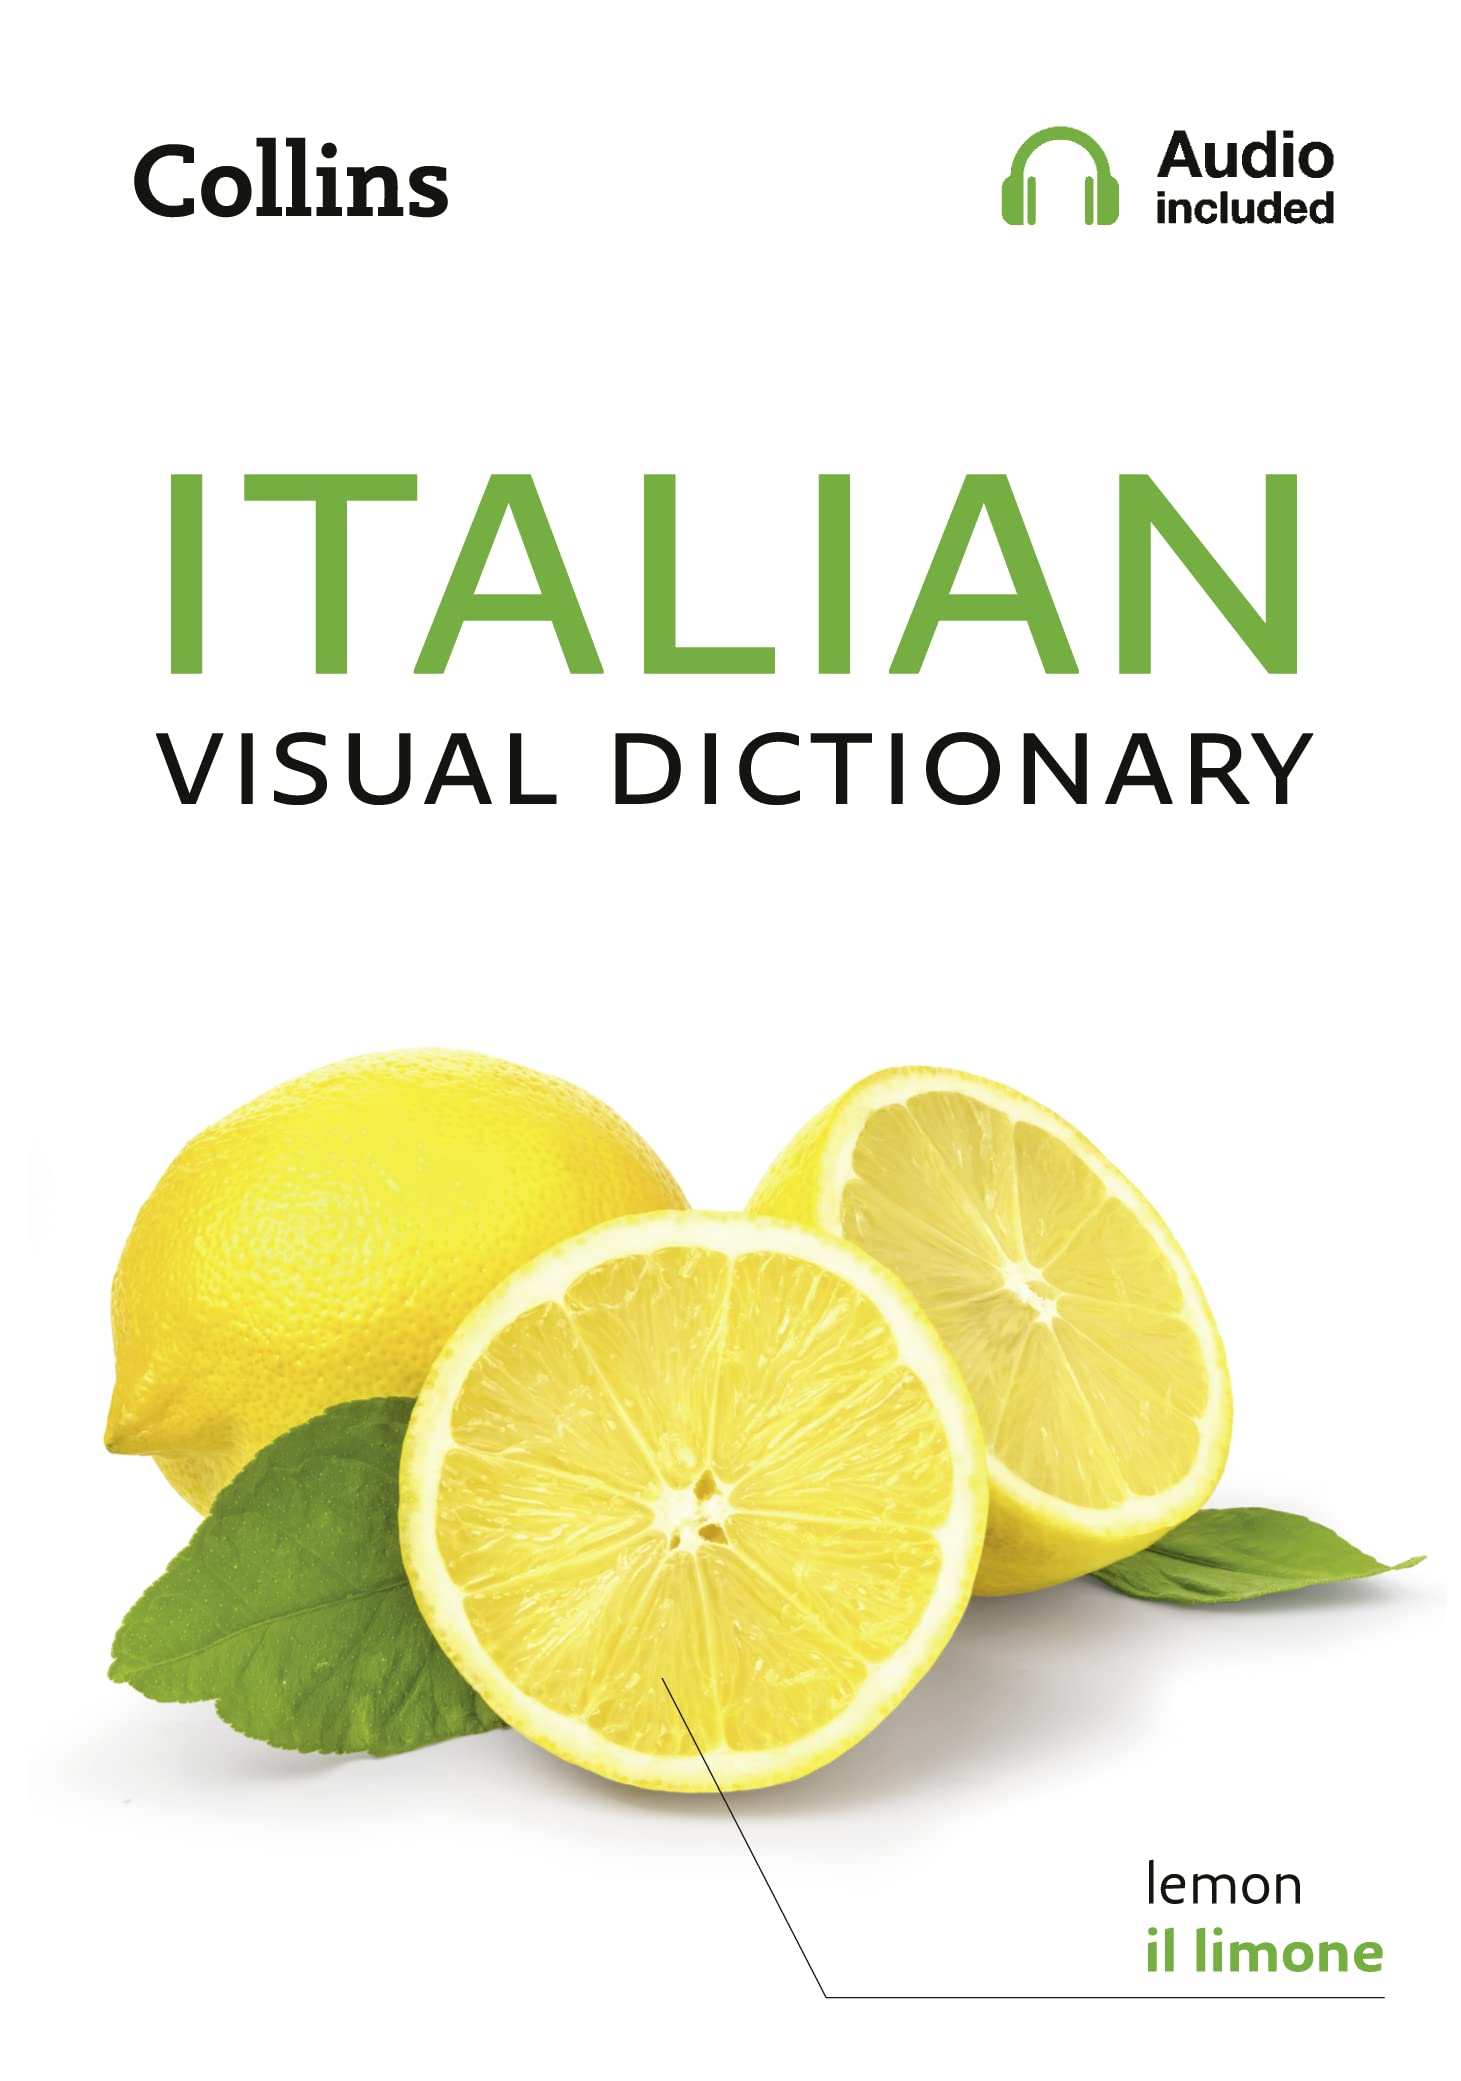 Collins Visual Dictionary: Italian